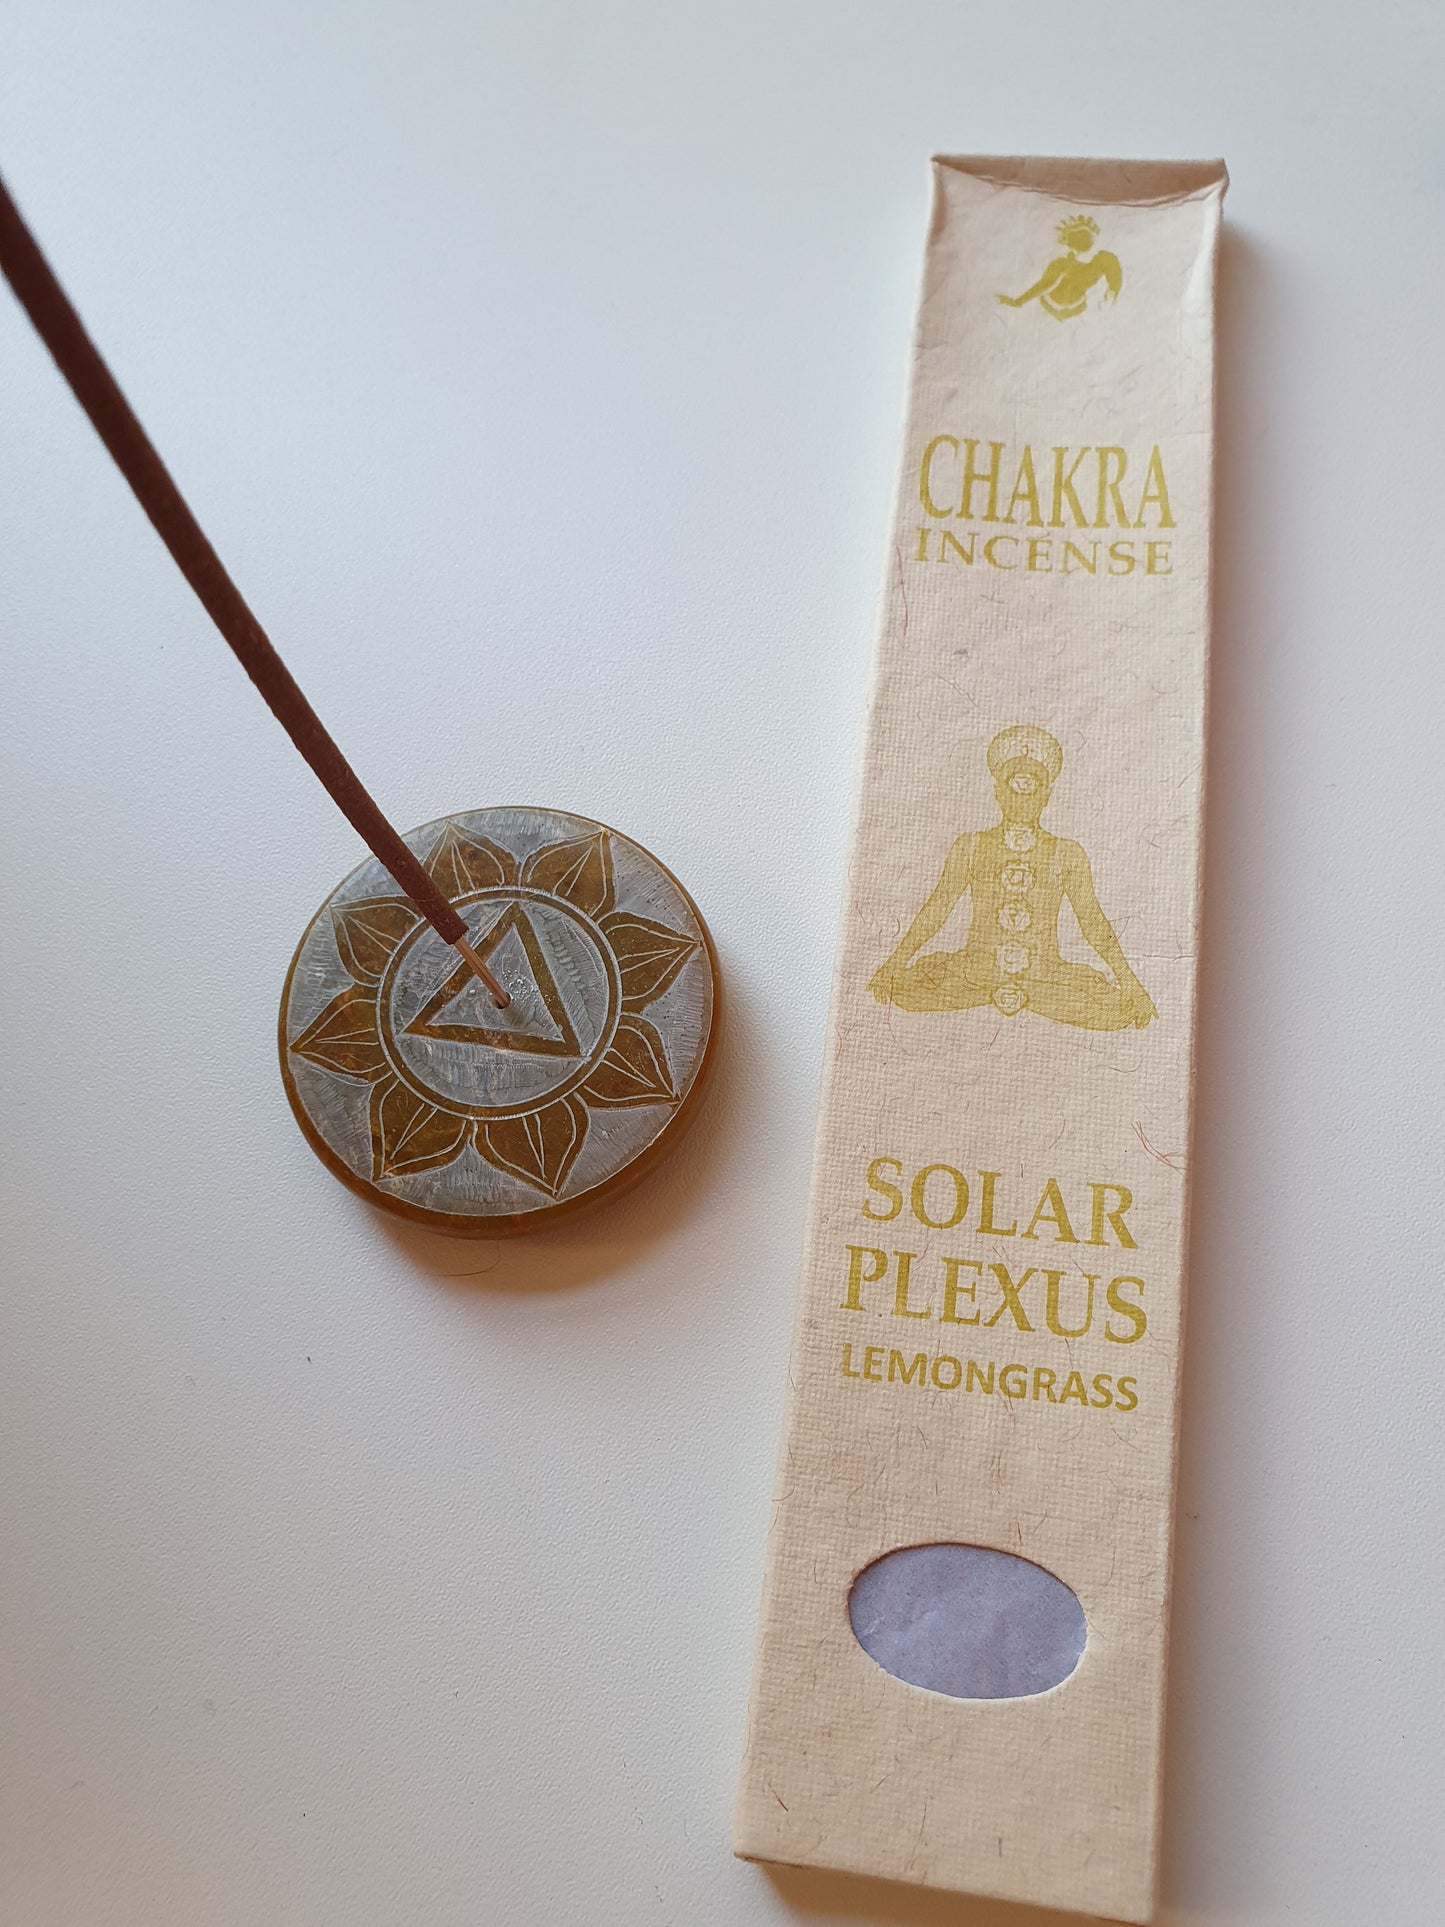 Chakra Incense Räucherstäbchen Lemongrass - Solar Plexus